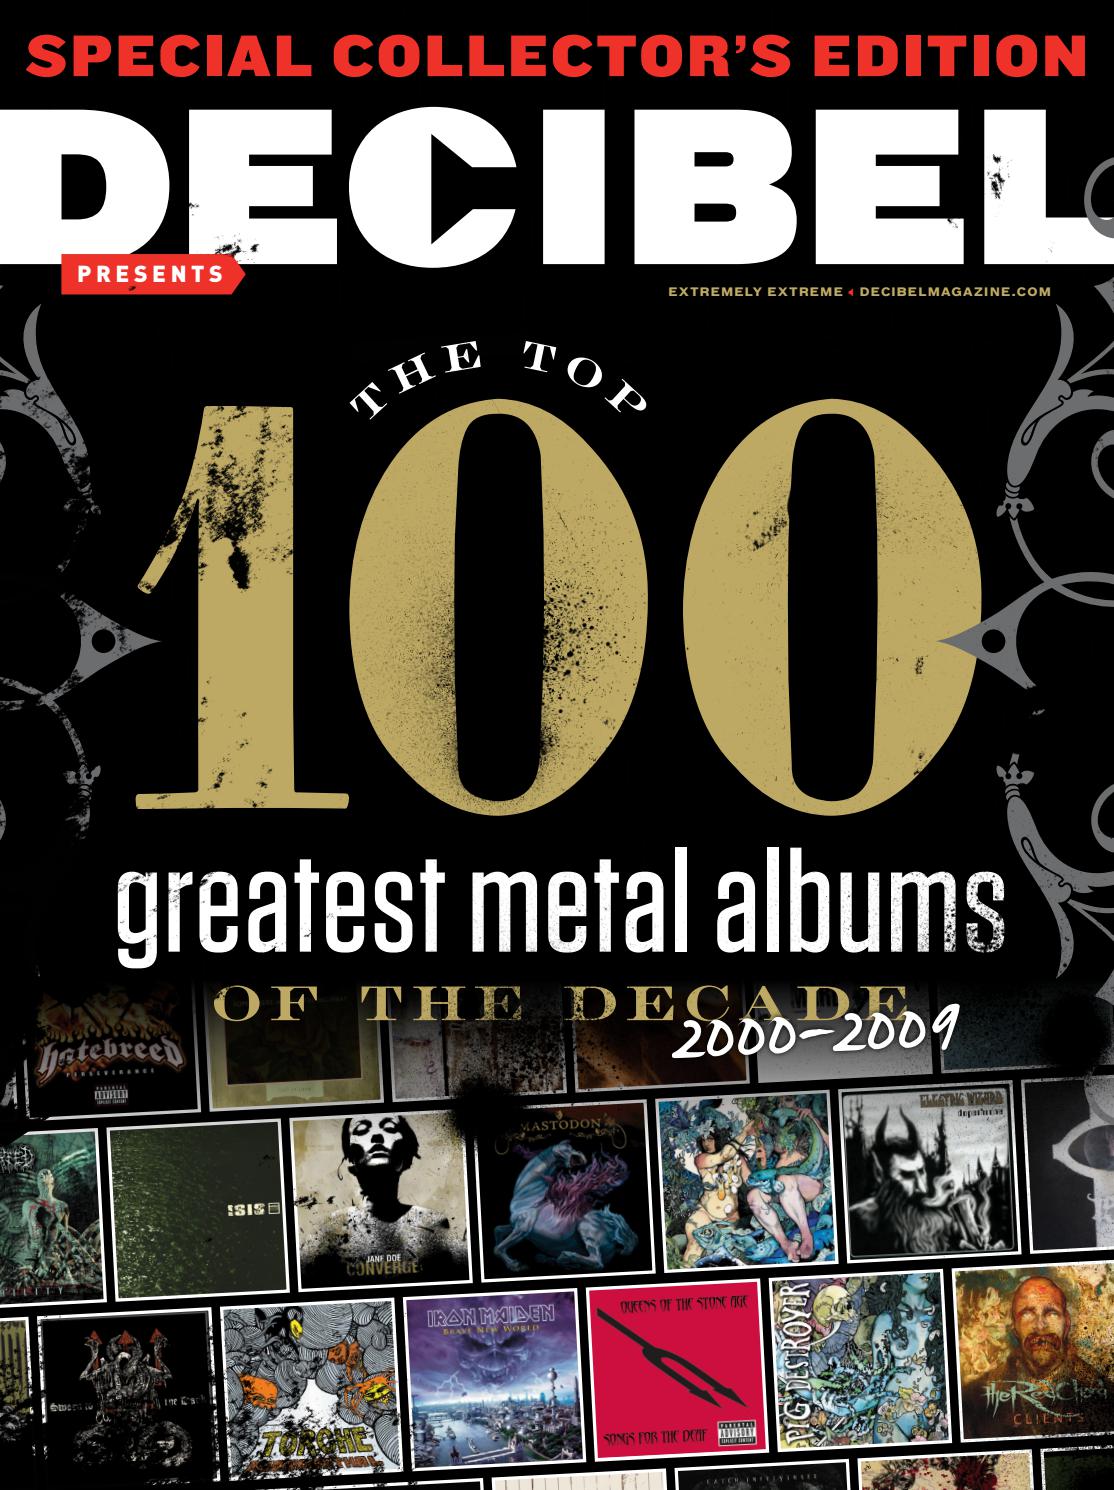 Decibel Magazine - Top 100 Albums of the Decade 2000-2009